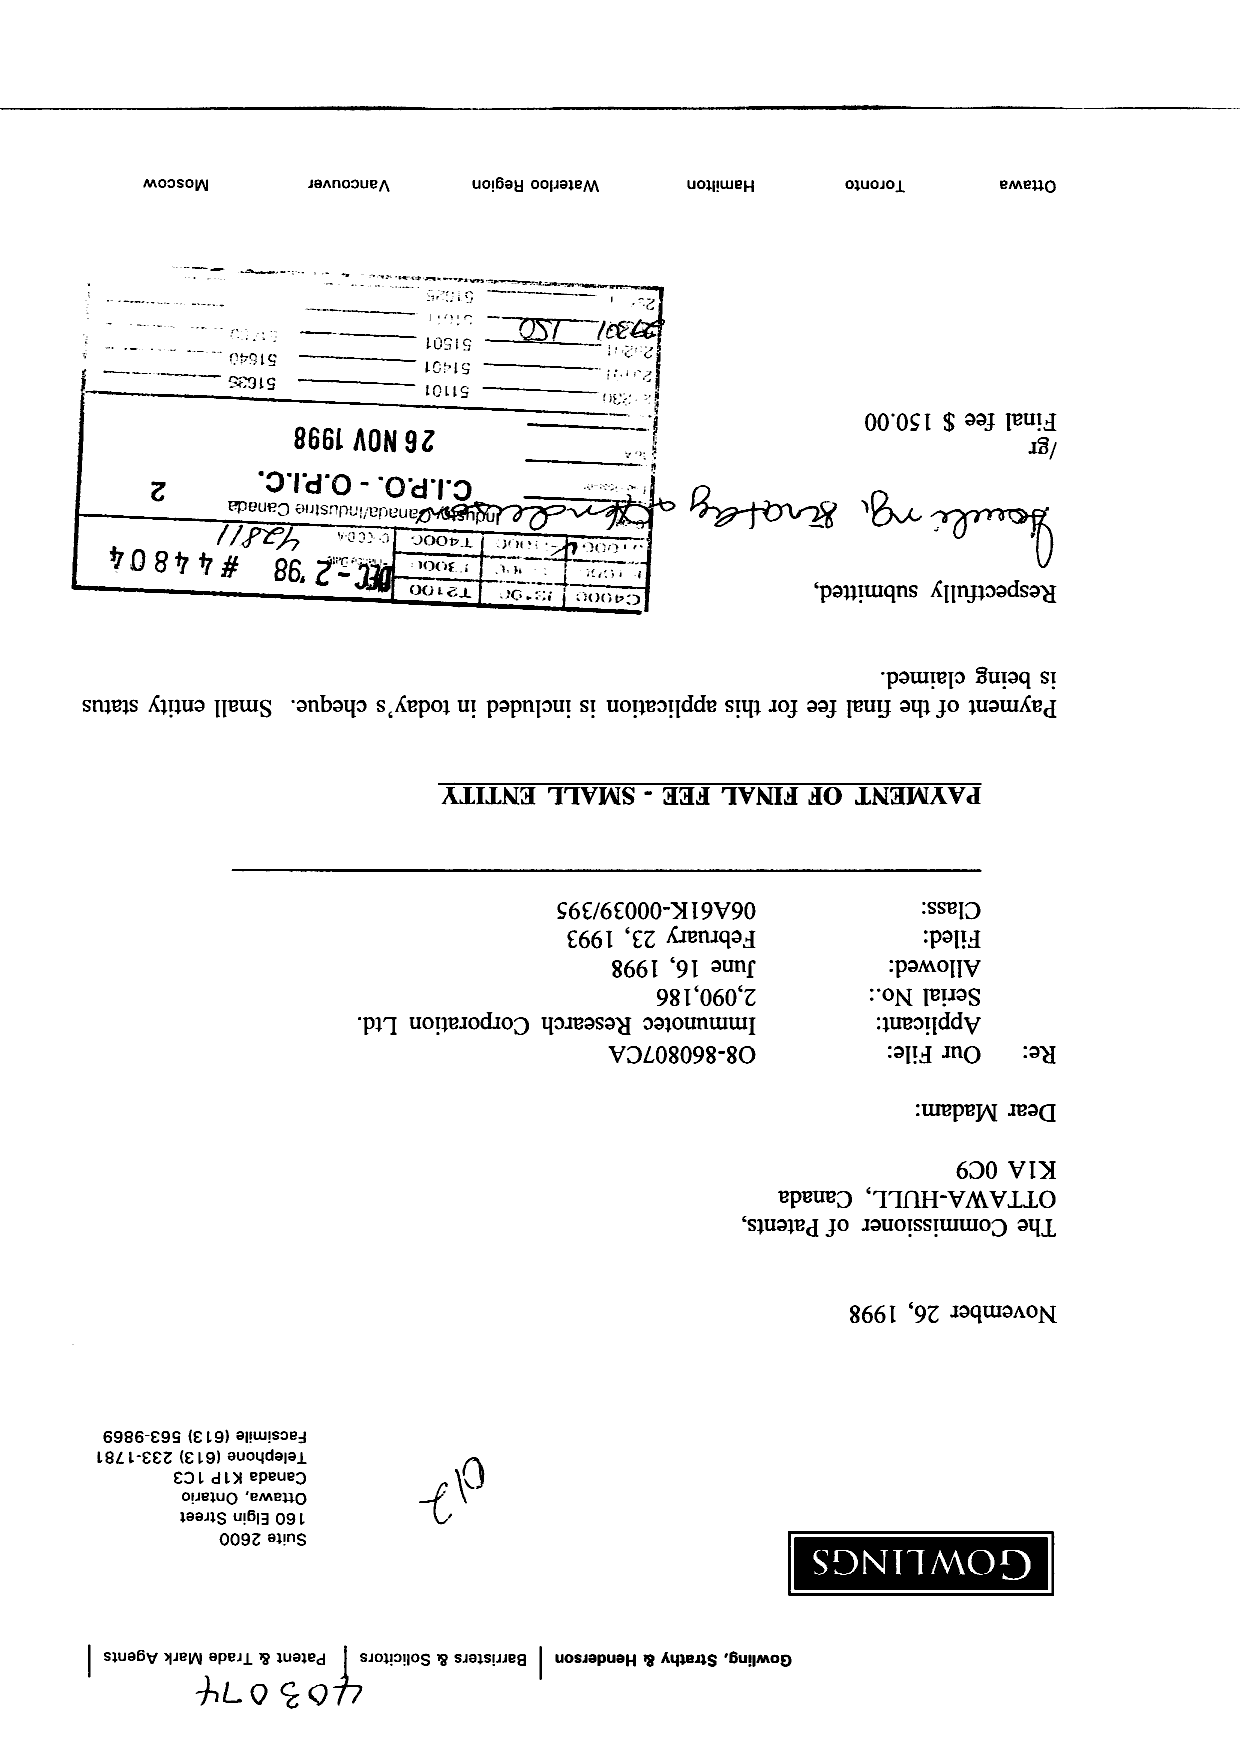 Canadian Patent Document 2090186. Correspondence 19971226. Image 1 of 1